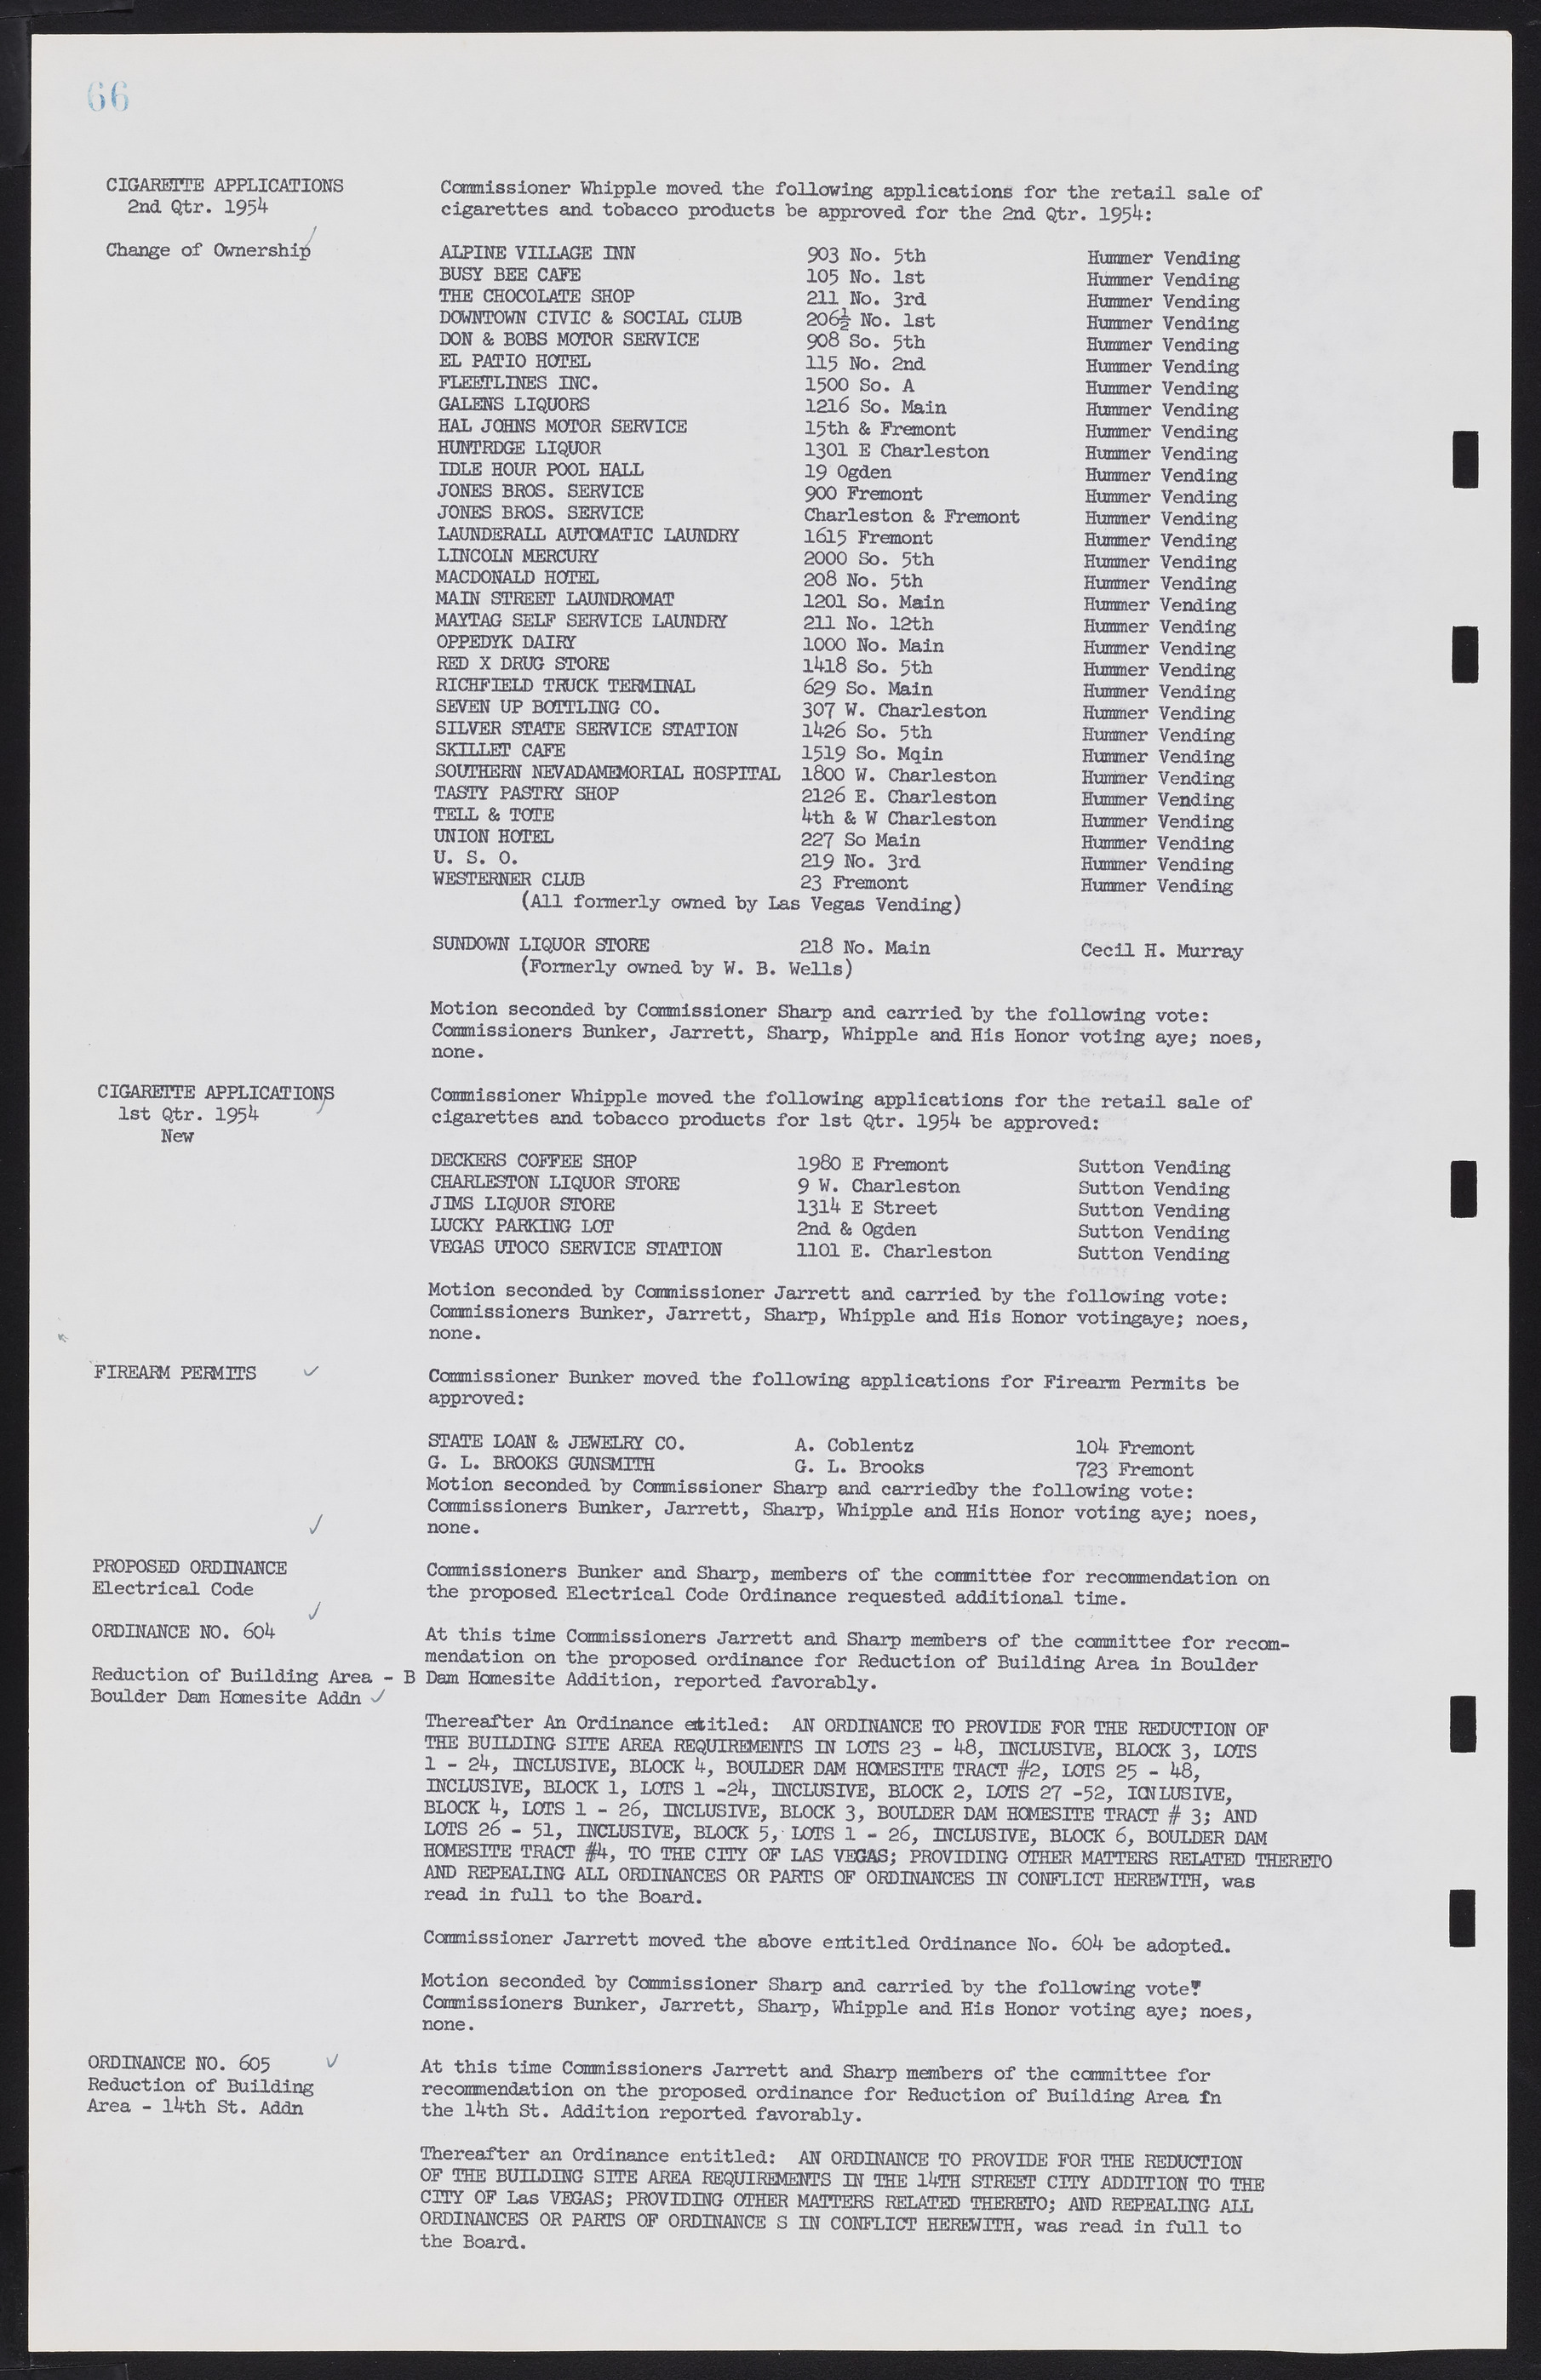 Las Vegas City Commission Minutes, February 17, 1954 to September 21, 1955, lvc000009-70